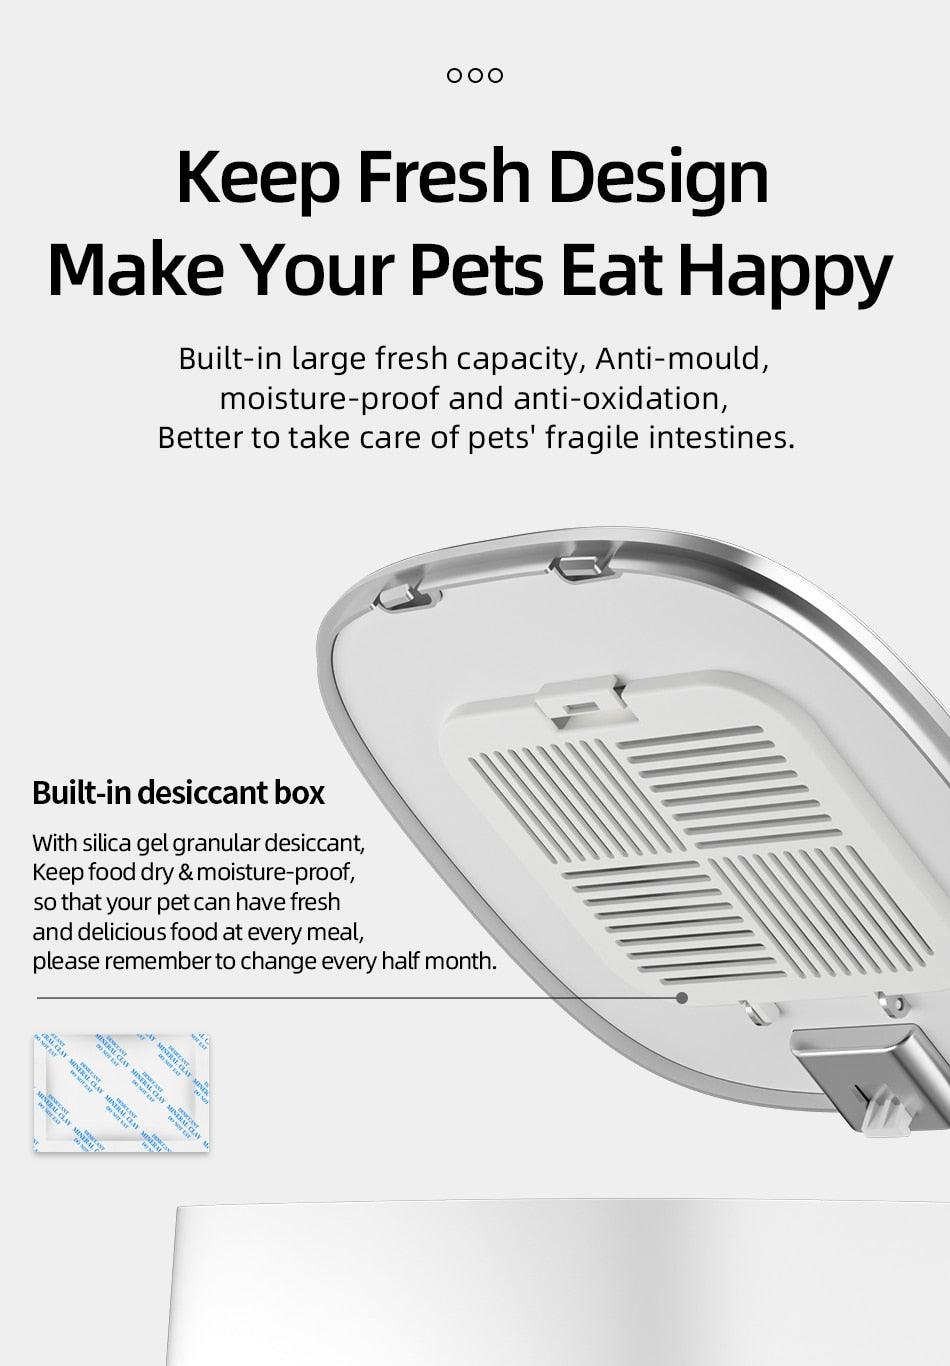 Automatic Pet Food Dispenser - karuna